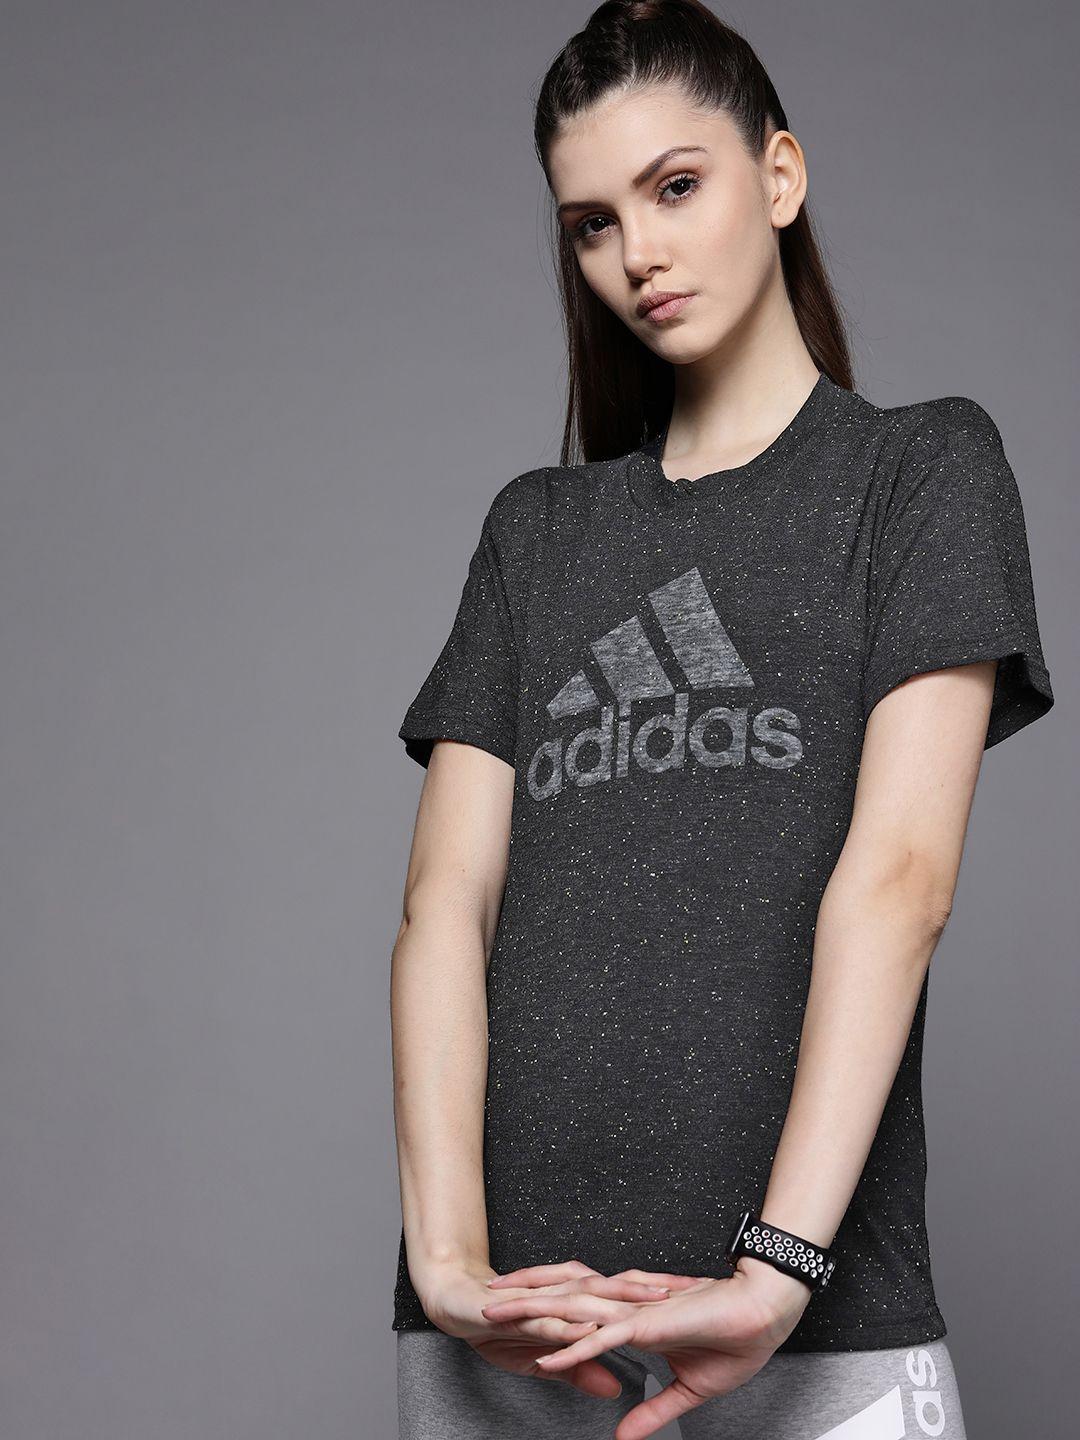 adidas women charcoal future icons winners 3 t-shirt